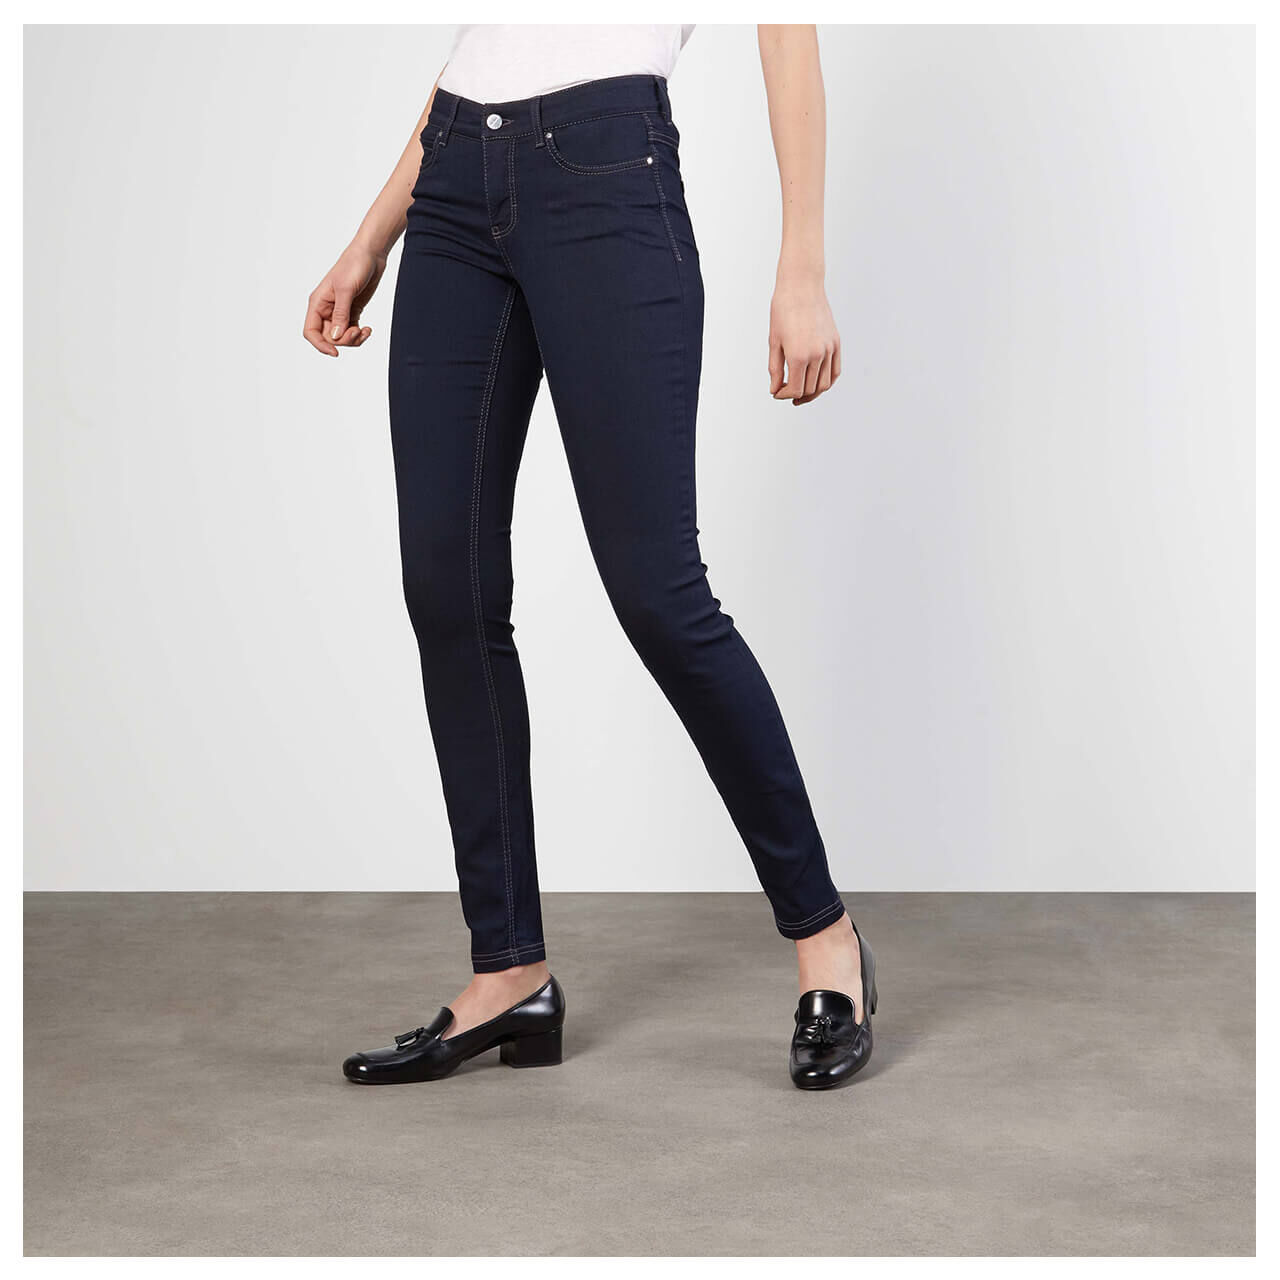 MAC Jeans Dream Skinny für Damen in Tiefdunkelblau, FarbNr.: D801